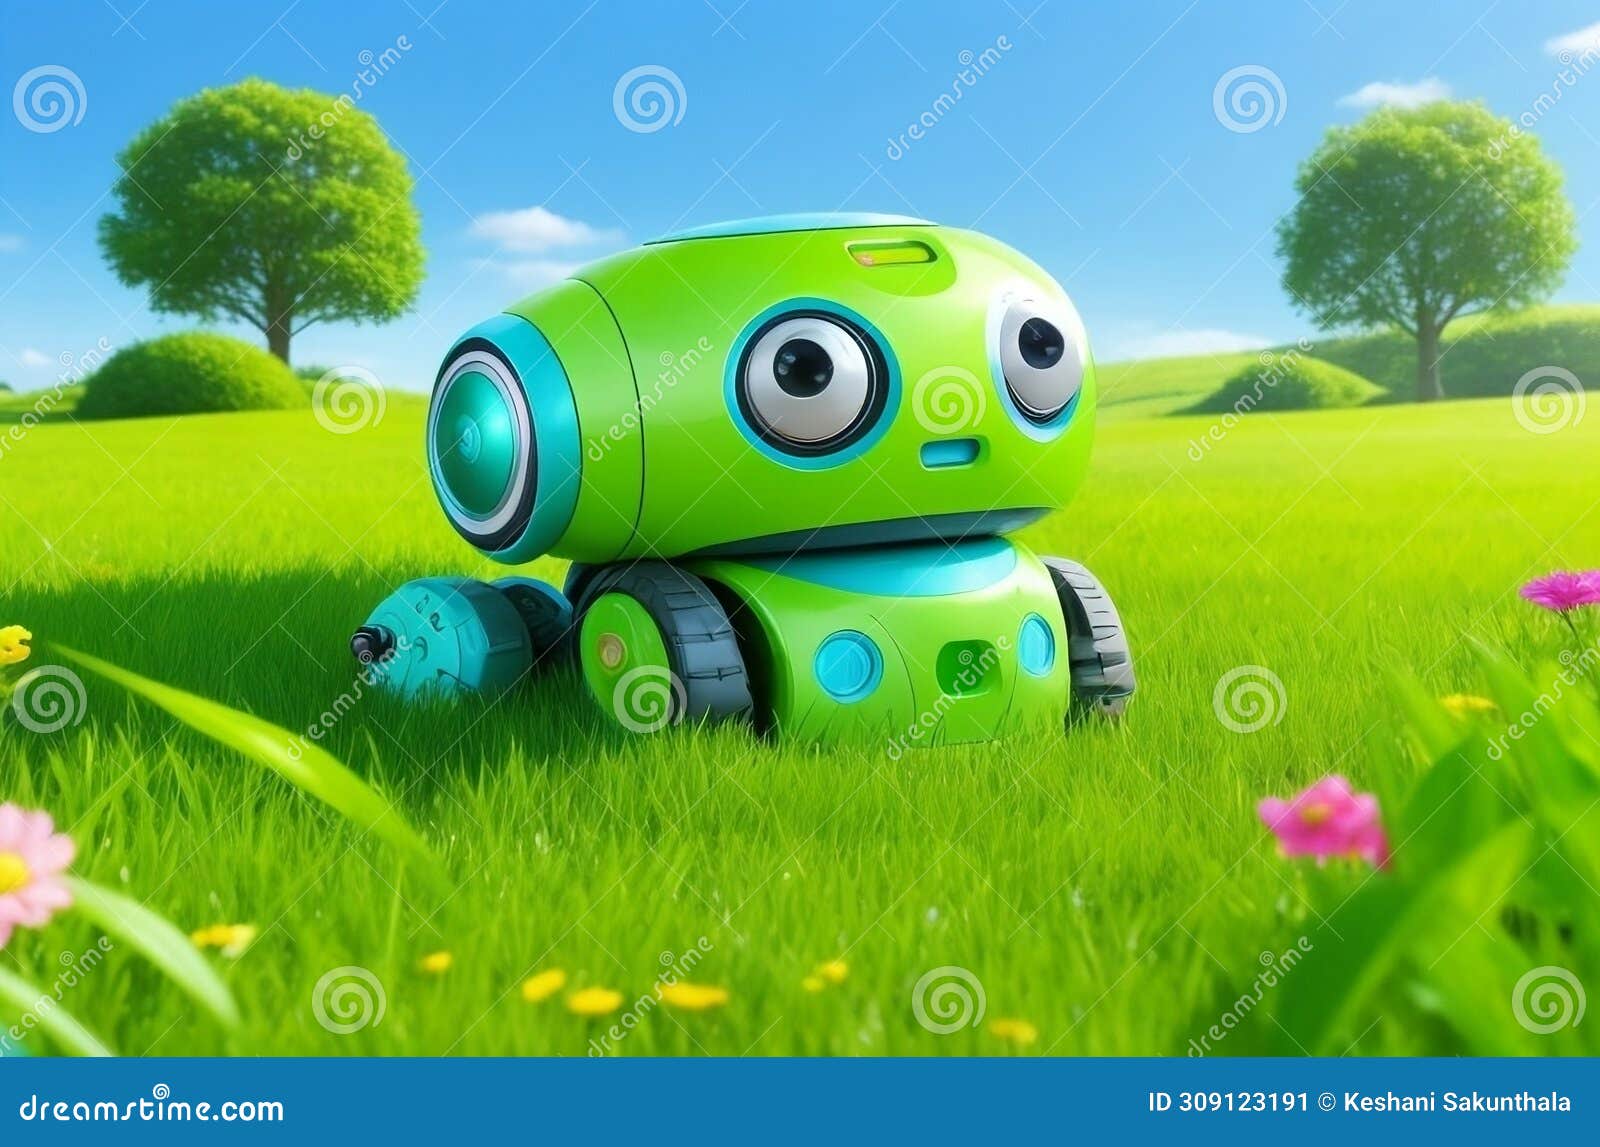 robot in a green field